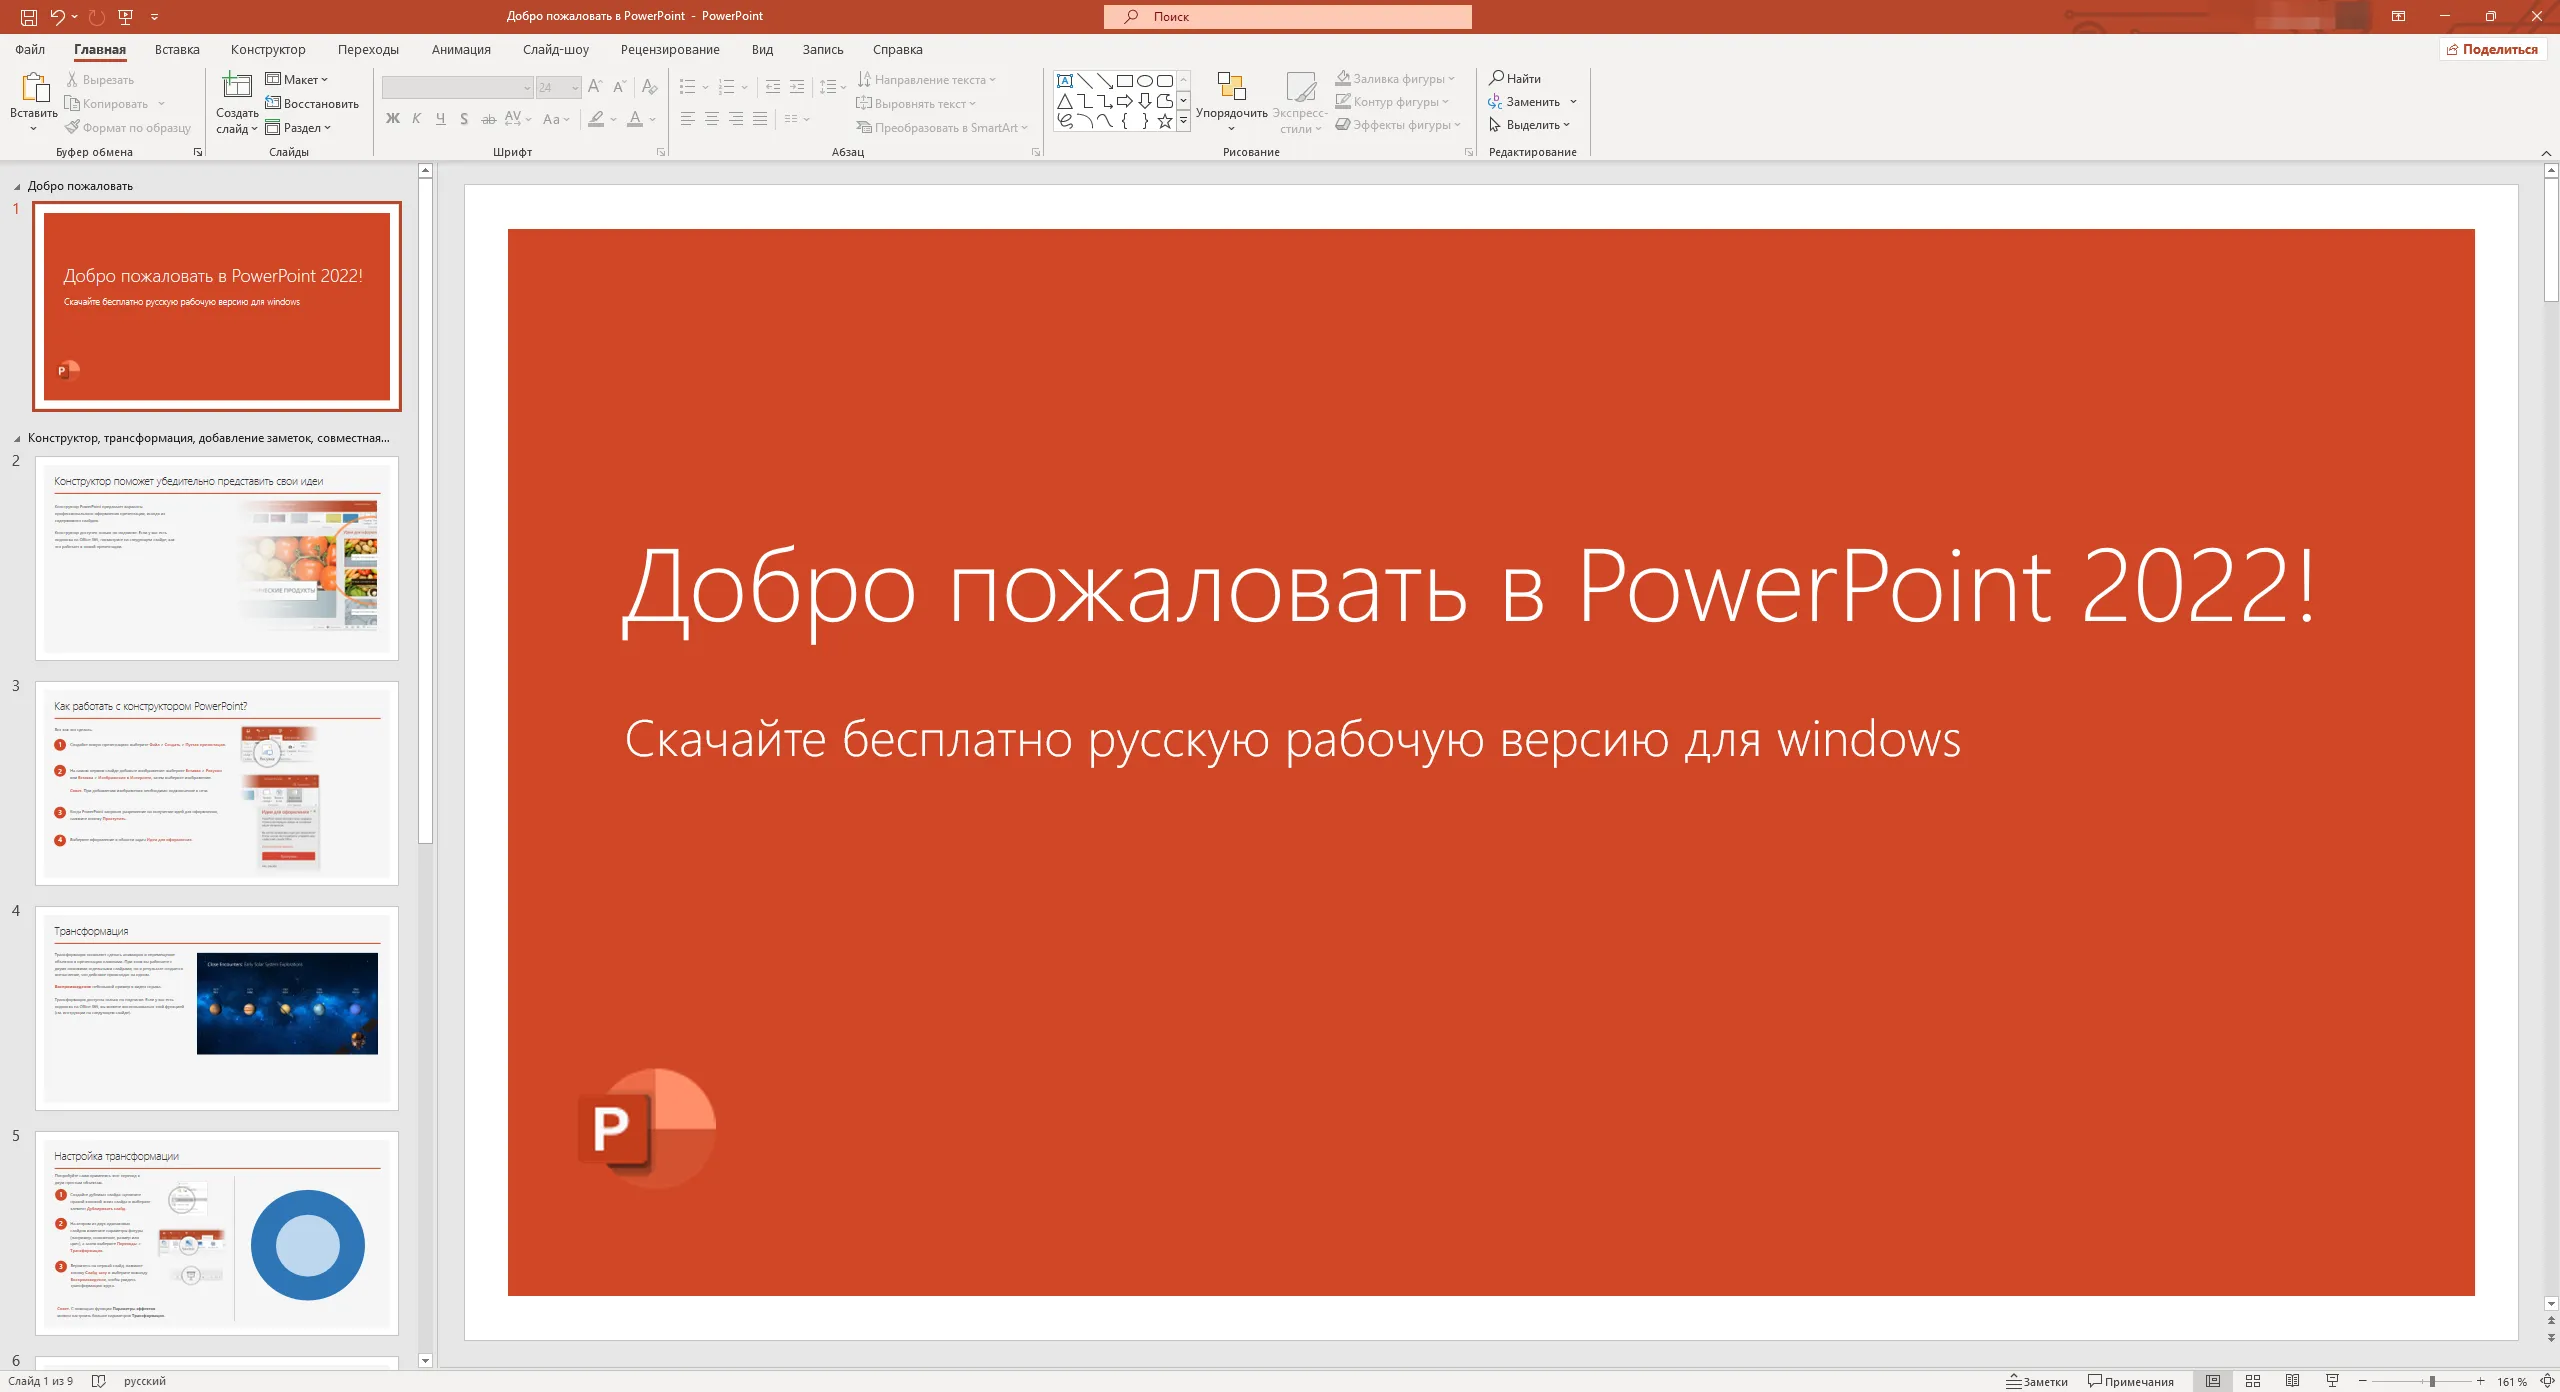 Microsoft PowerPoint 2022